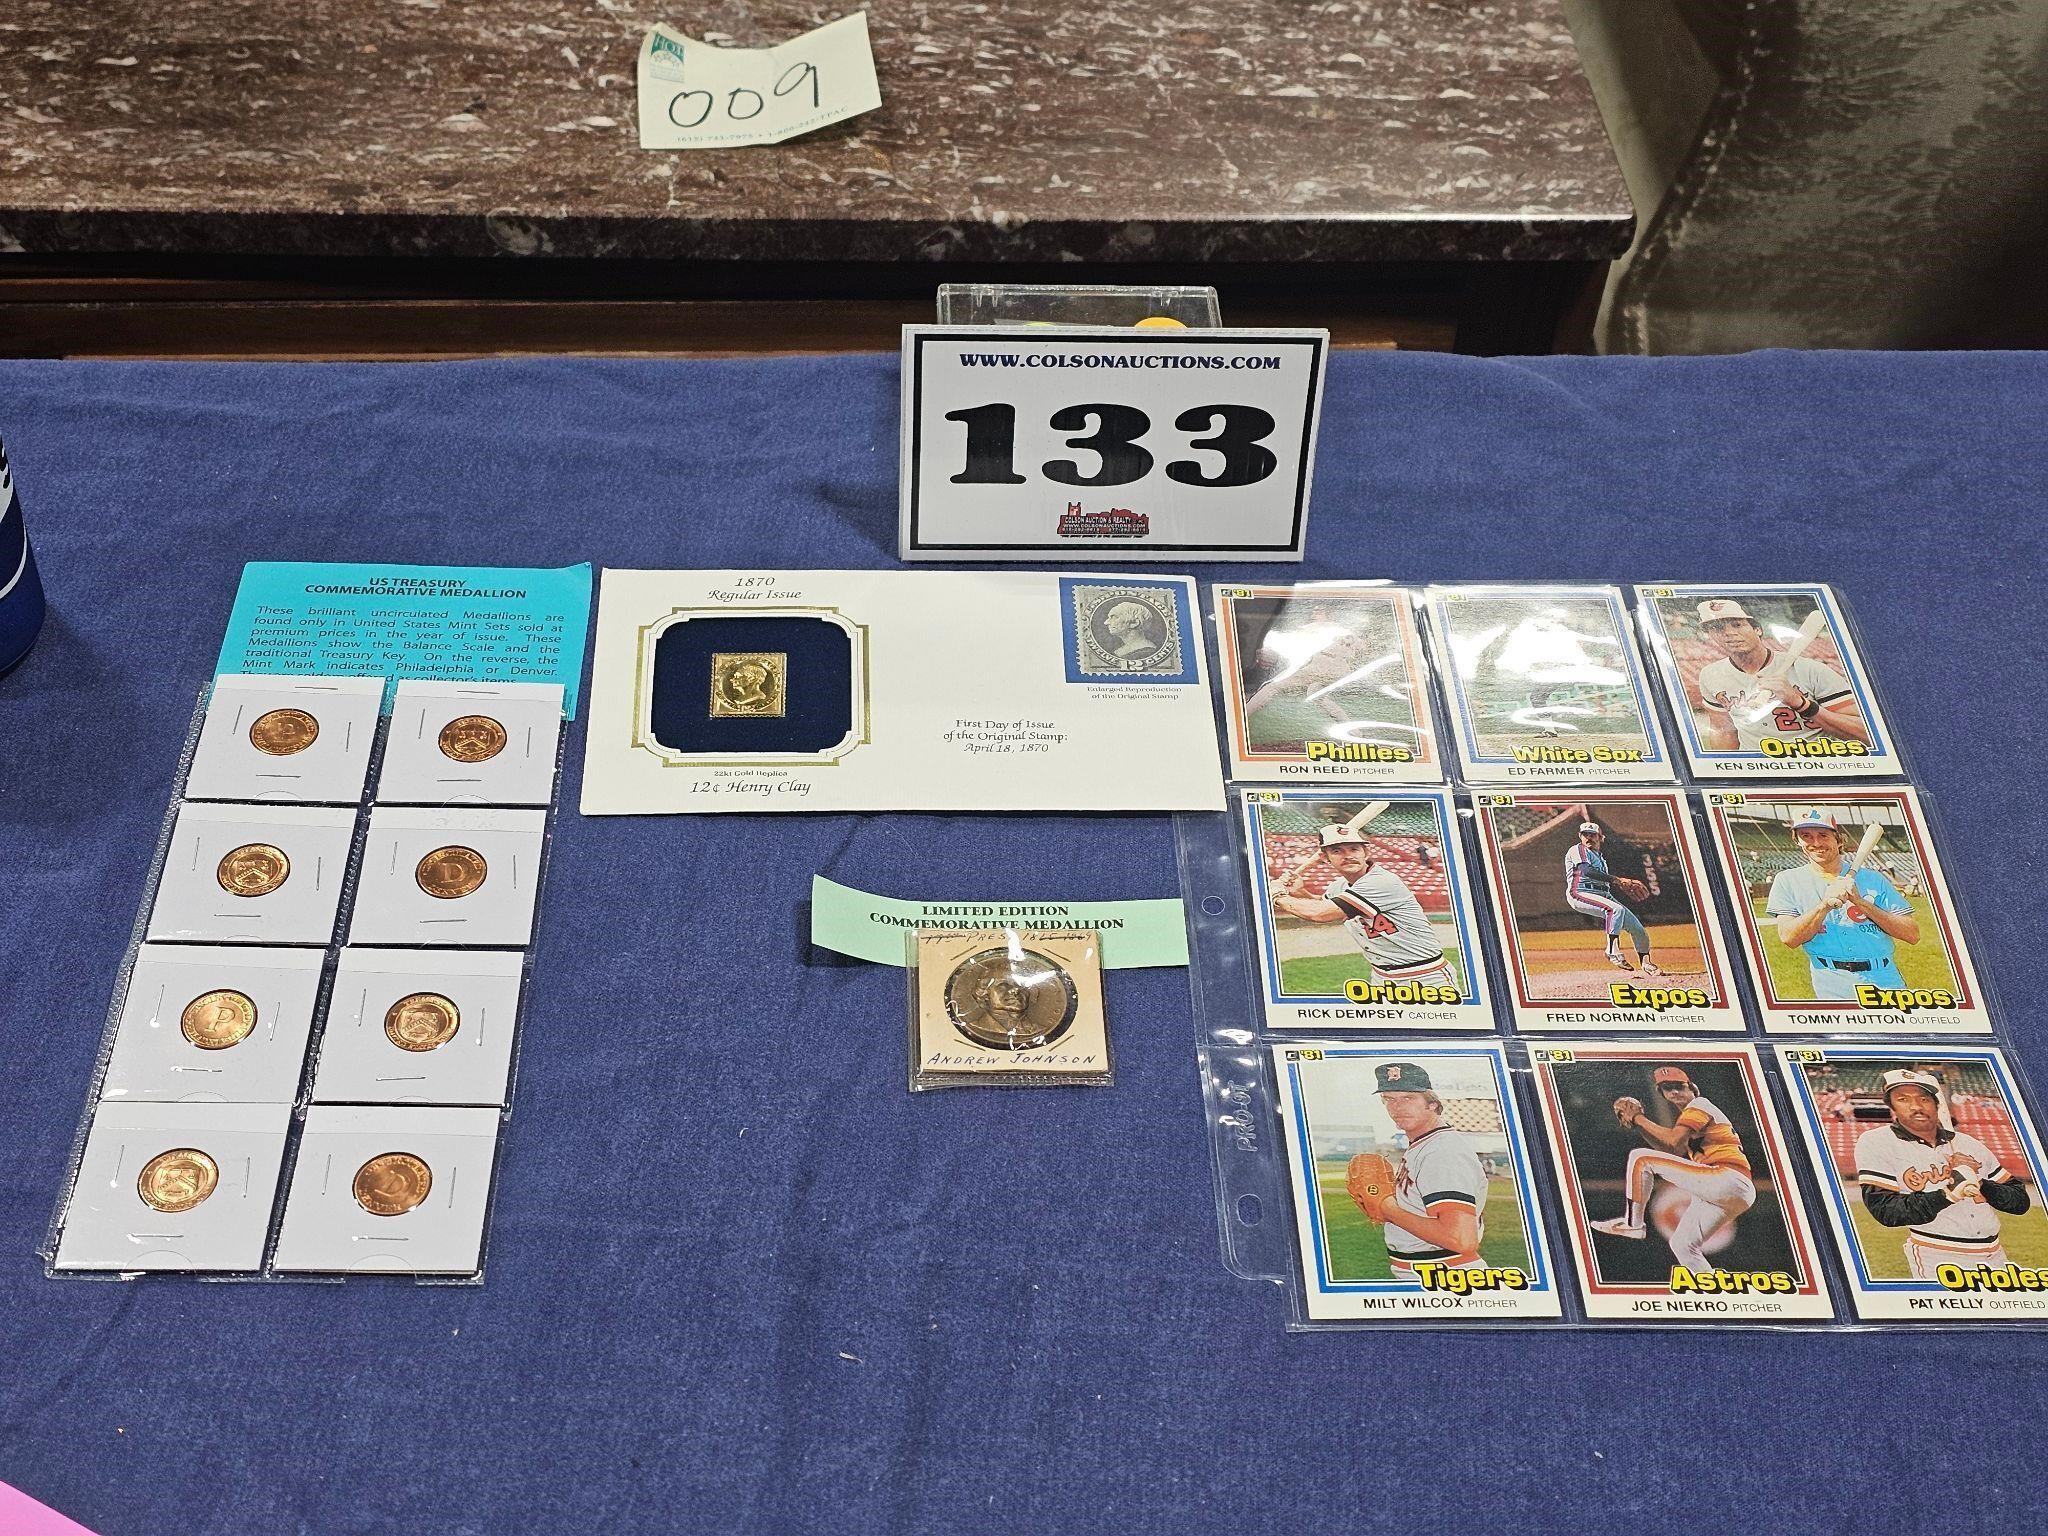 Medallions, 1981 Dondruss Baseball Cards,